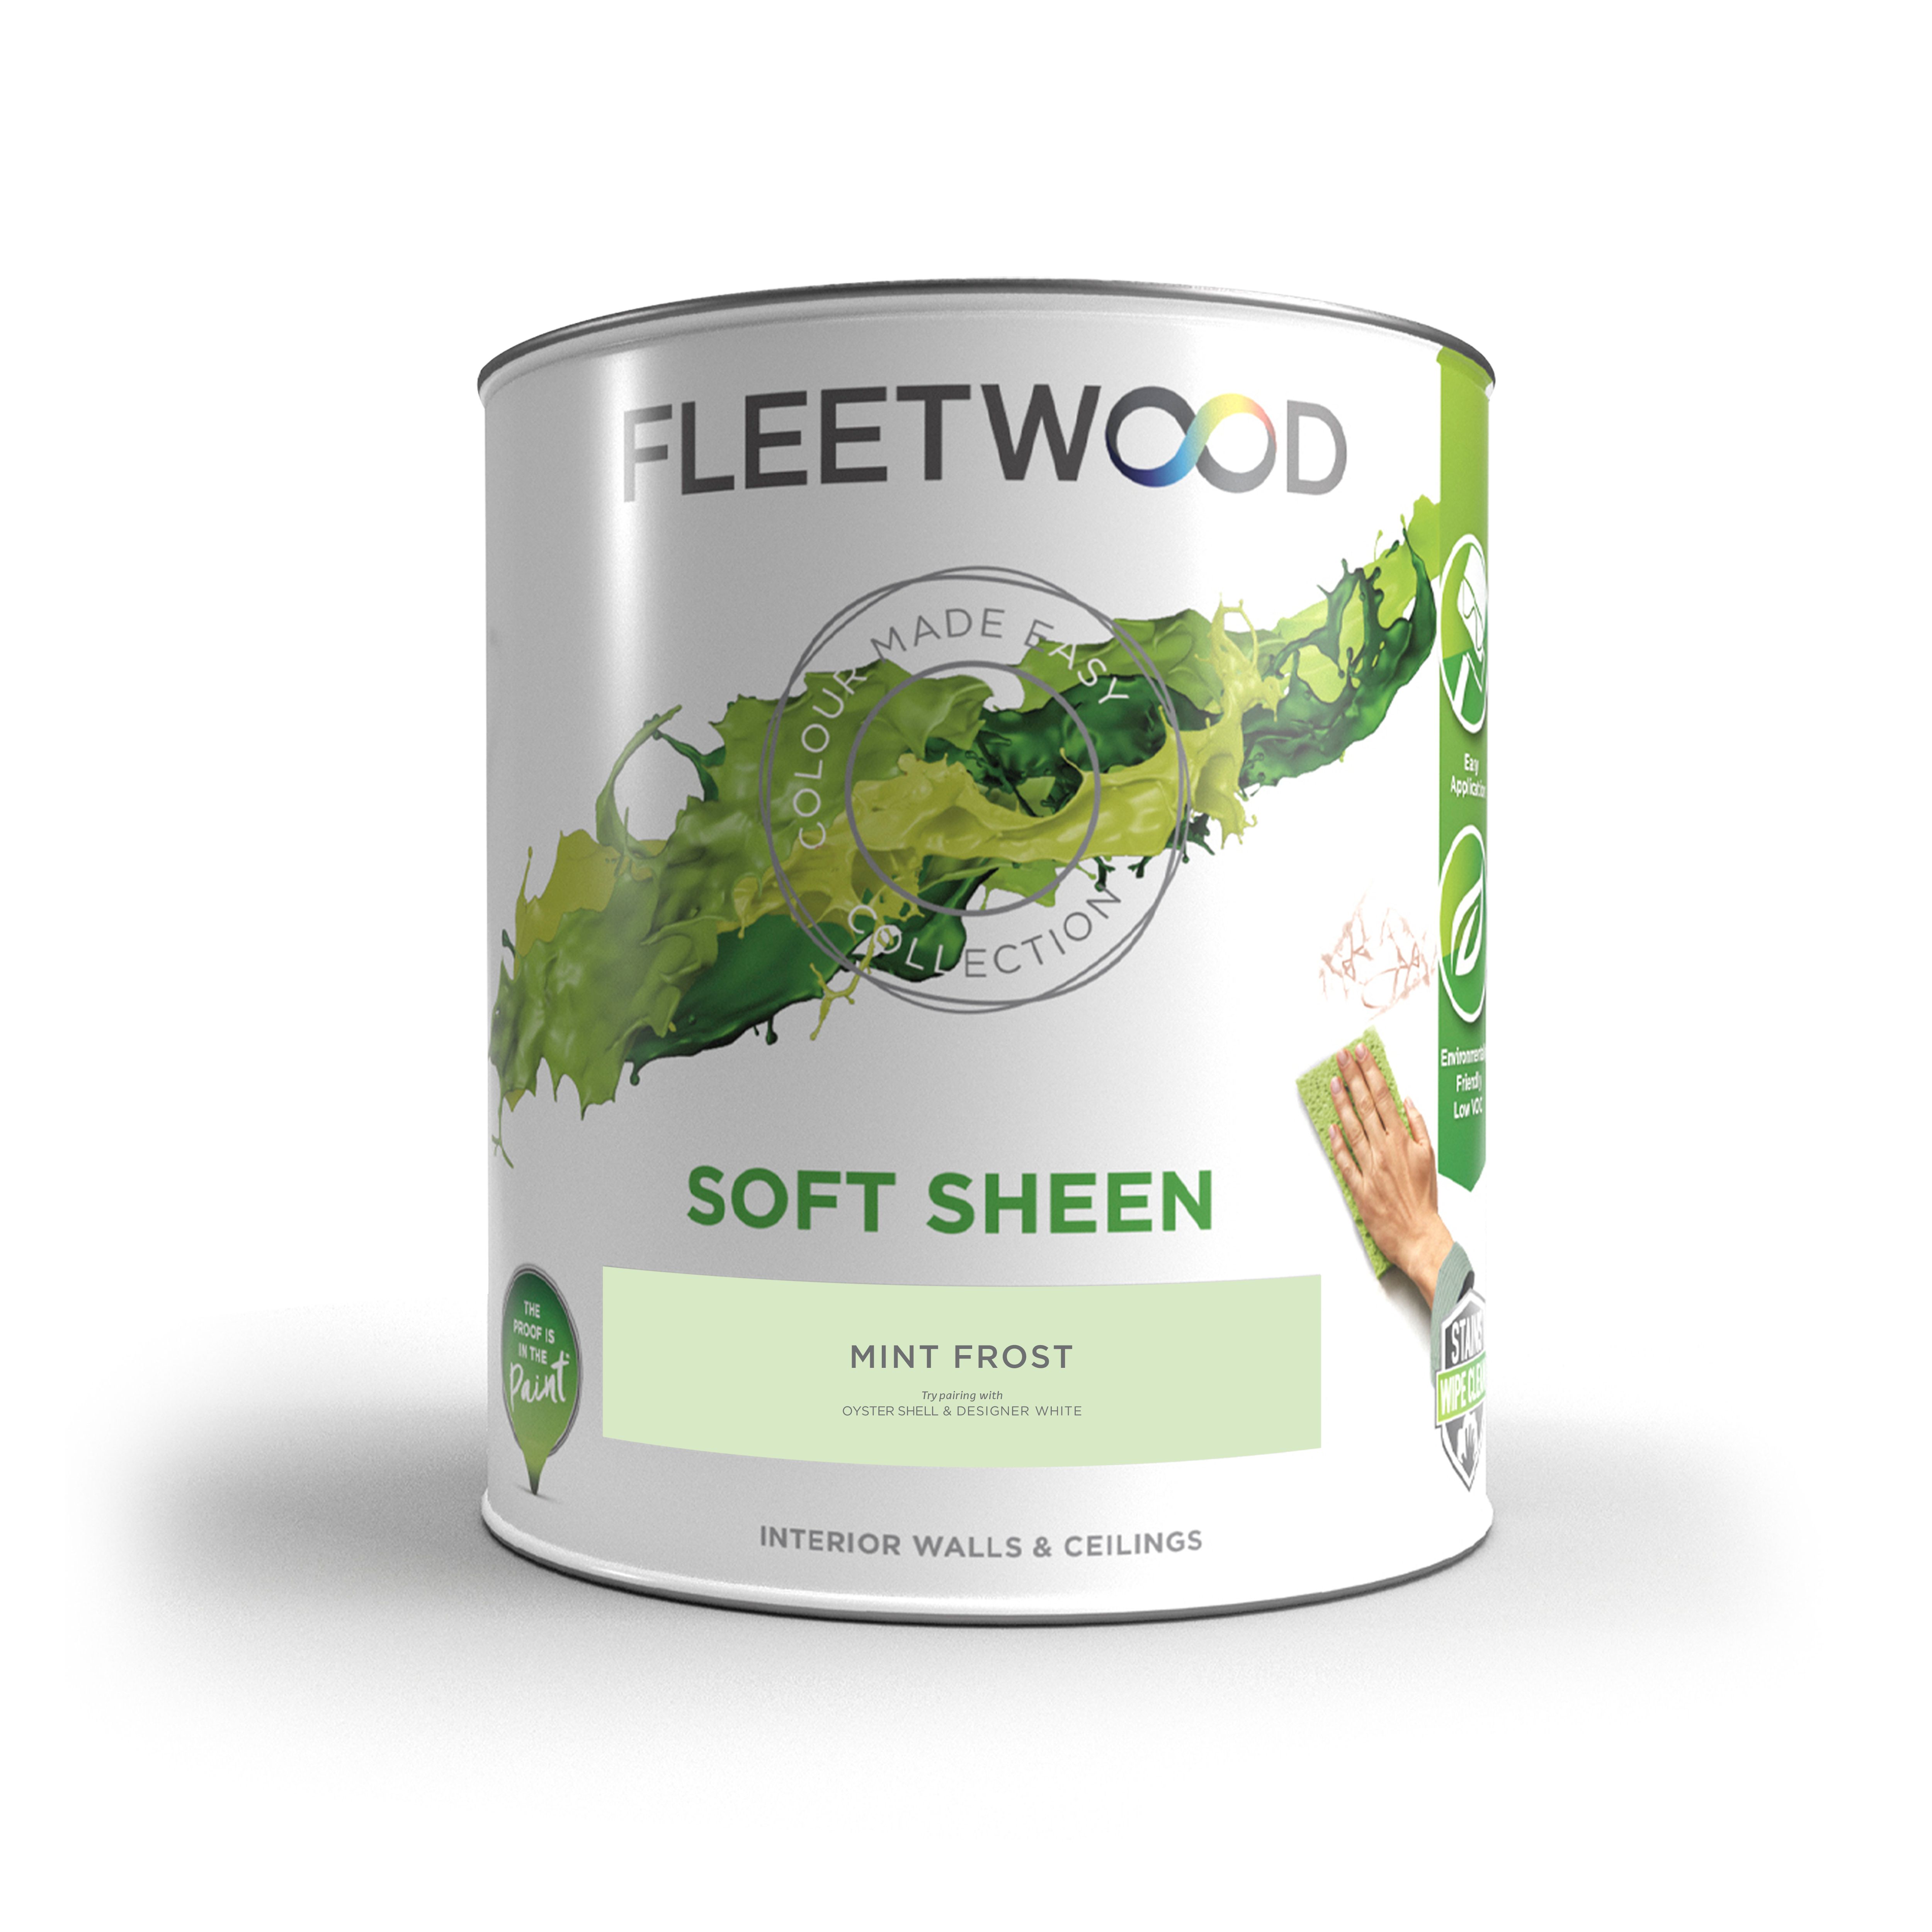 Fleetwood Mint Frost Soft sheen Emulsion paint, 5L